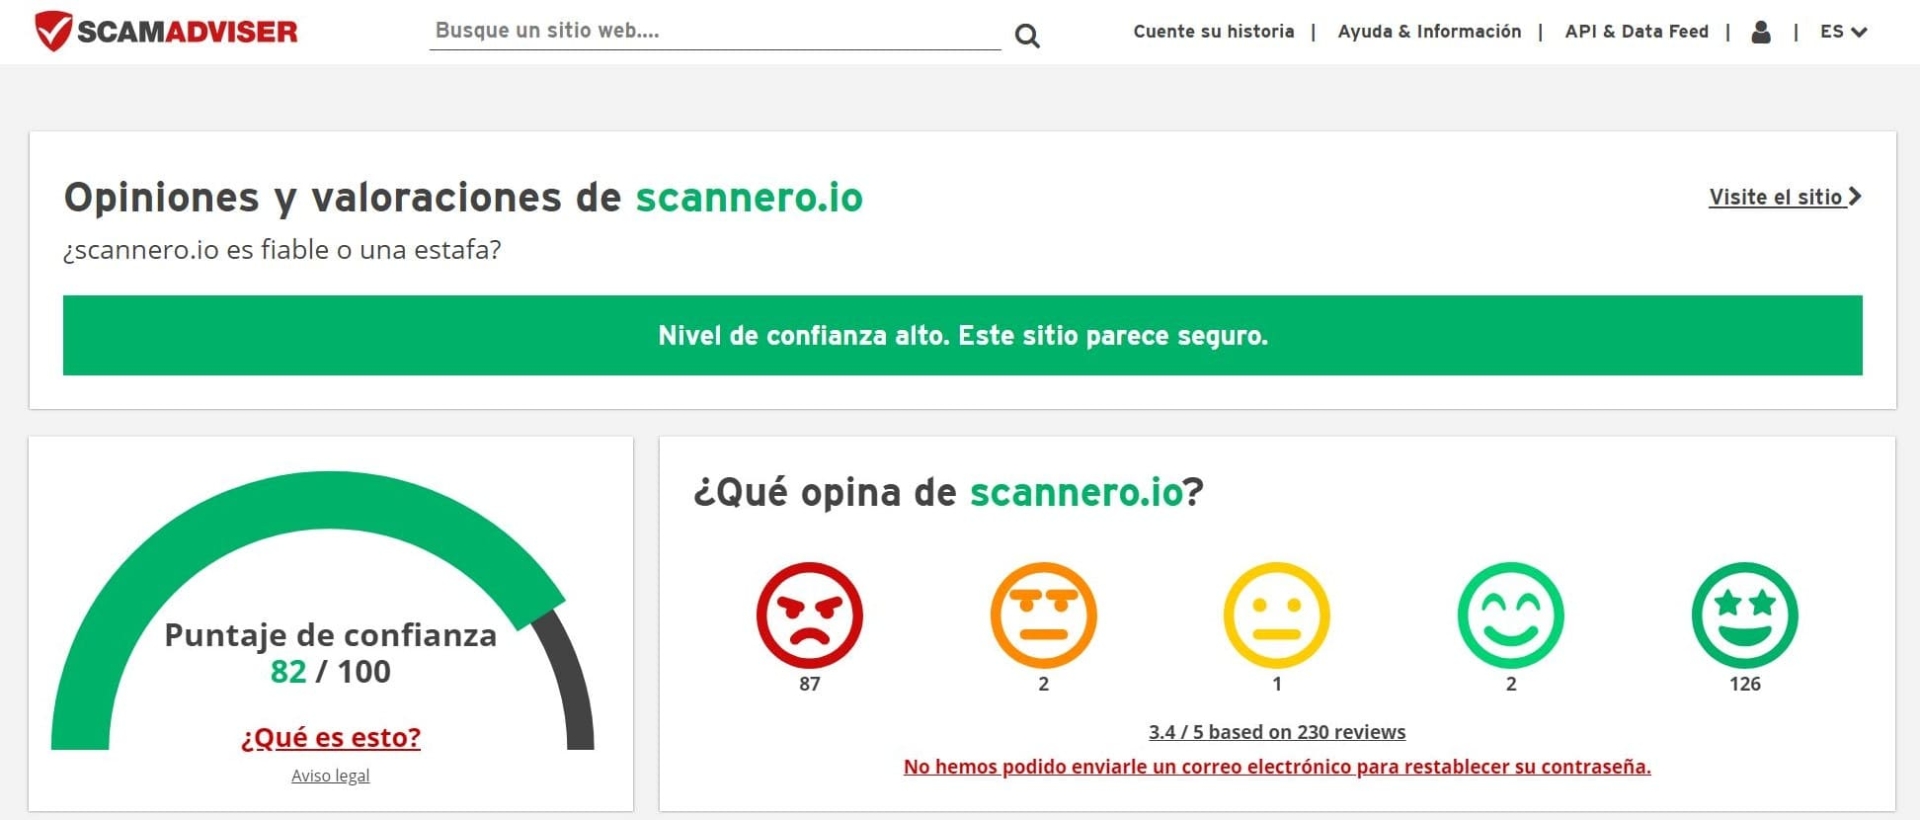 scamadviser website trustscore for scannero